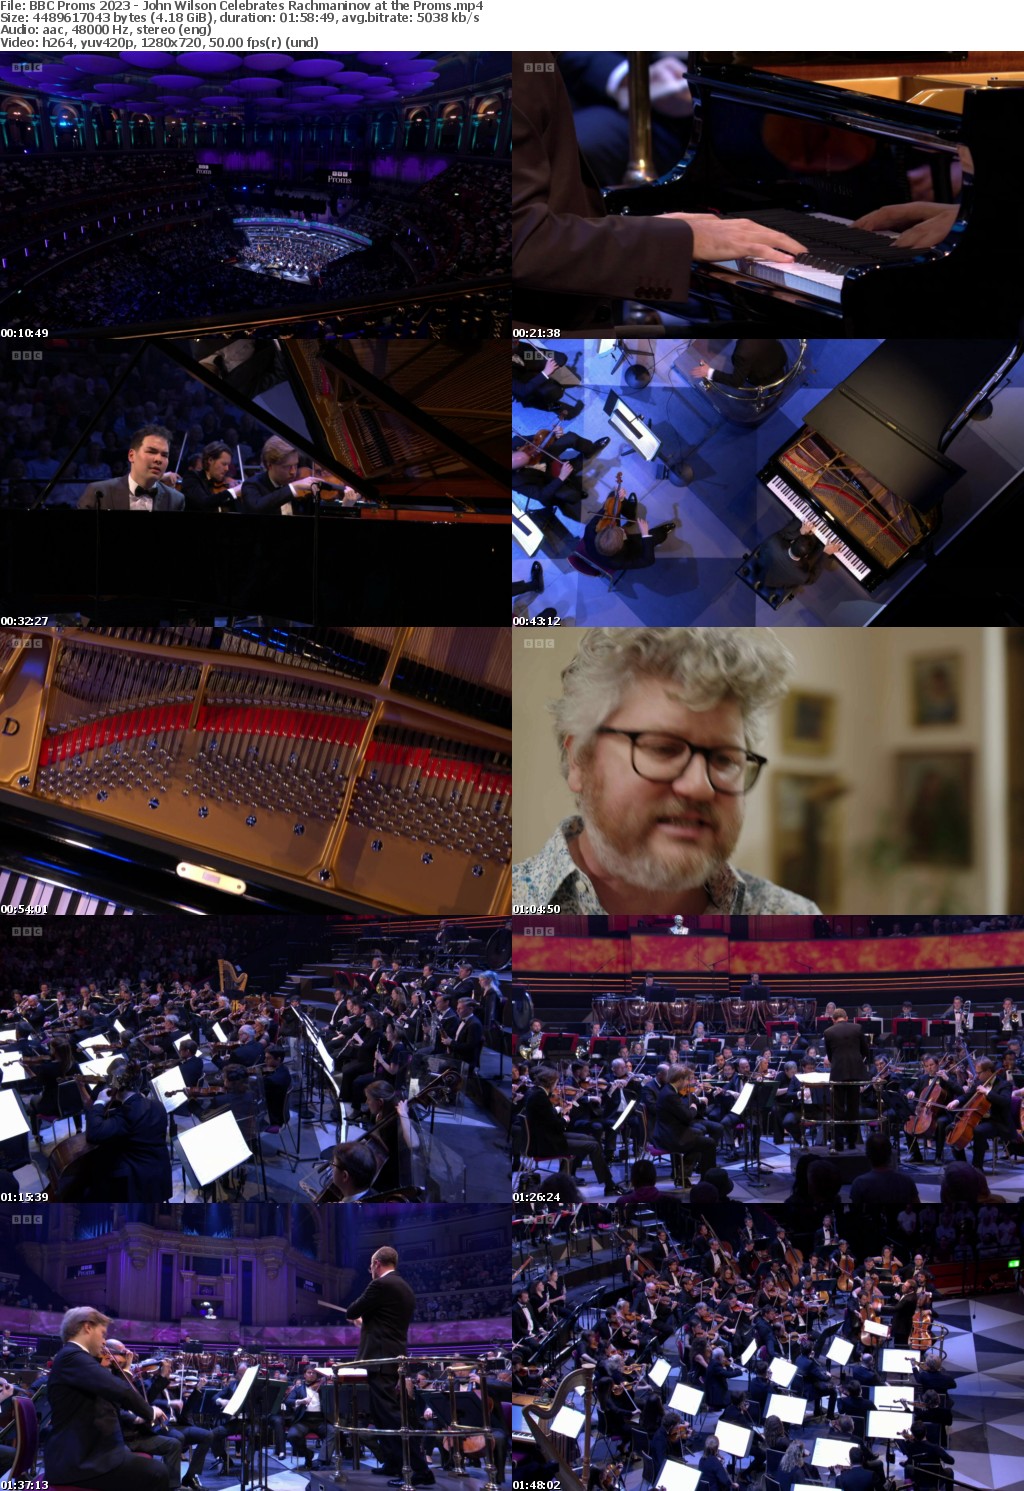 BBC Proms 2023 - John Wilson Celebrates Rachmaninov at the Prom (1280x720p HD, 50fps, soft Eng subs)